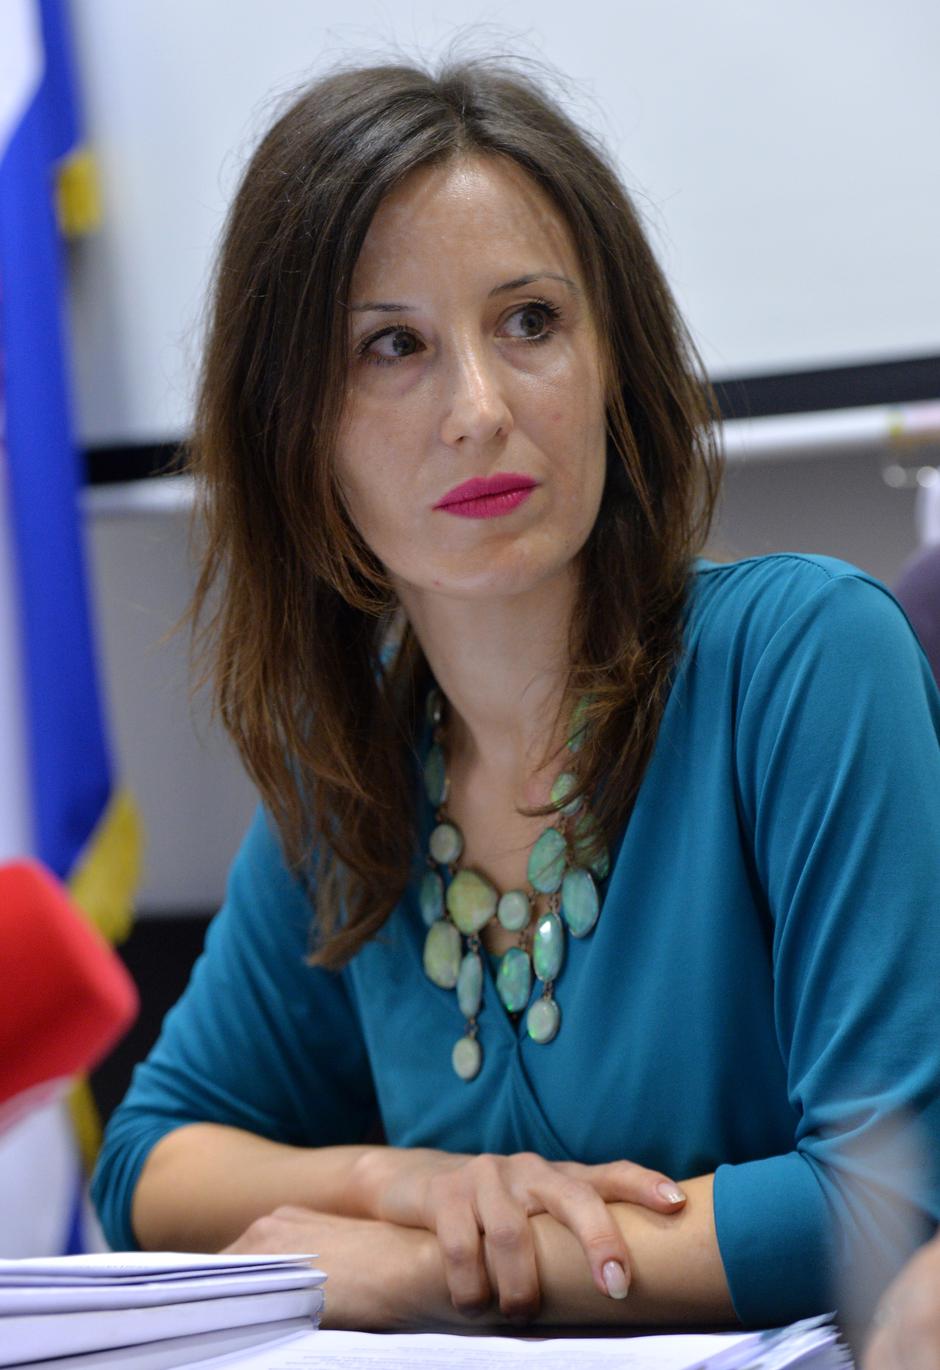 Dalija Orešković | Author: Marko Lukunić/PIXSELL